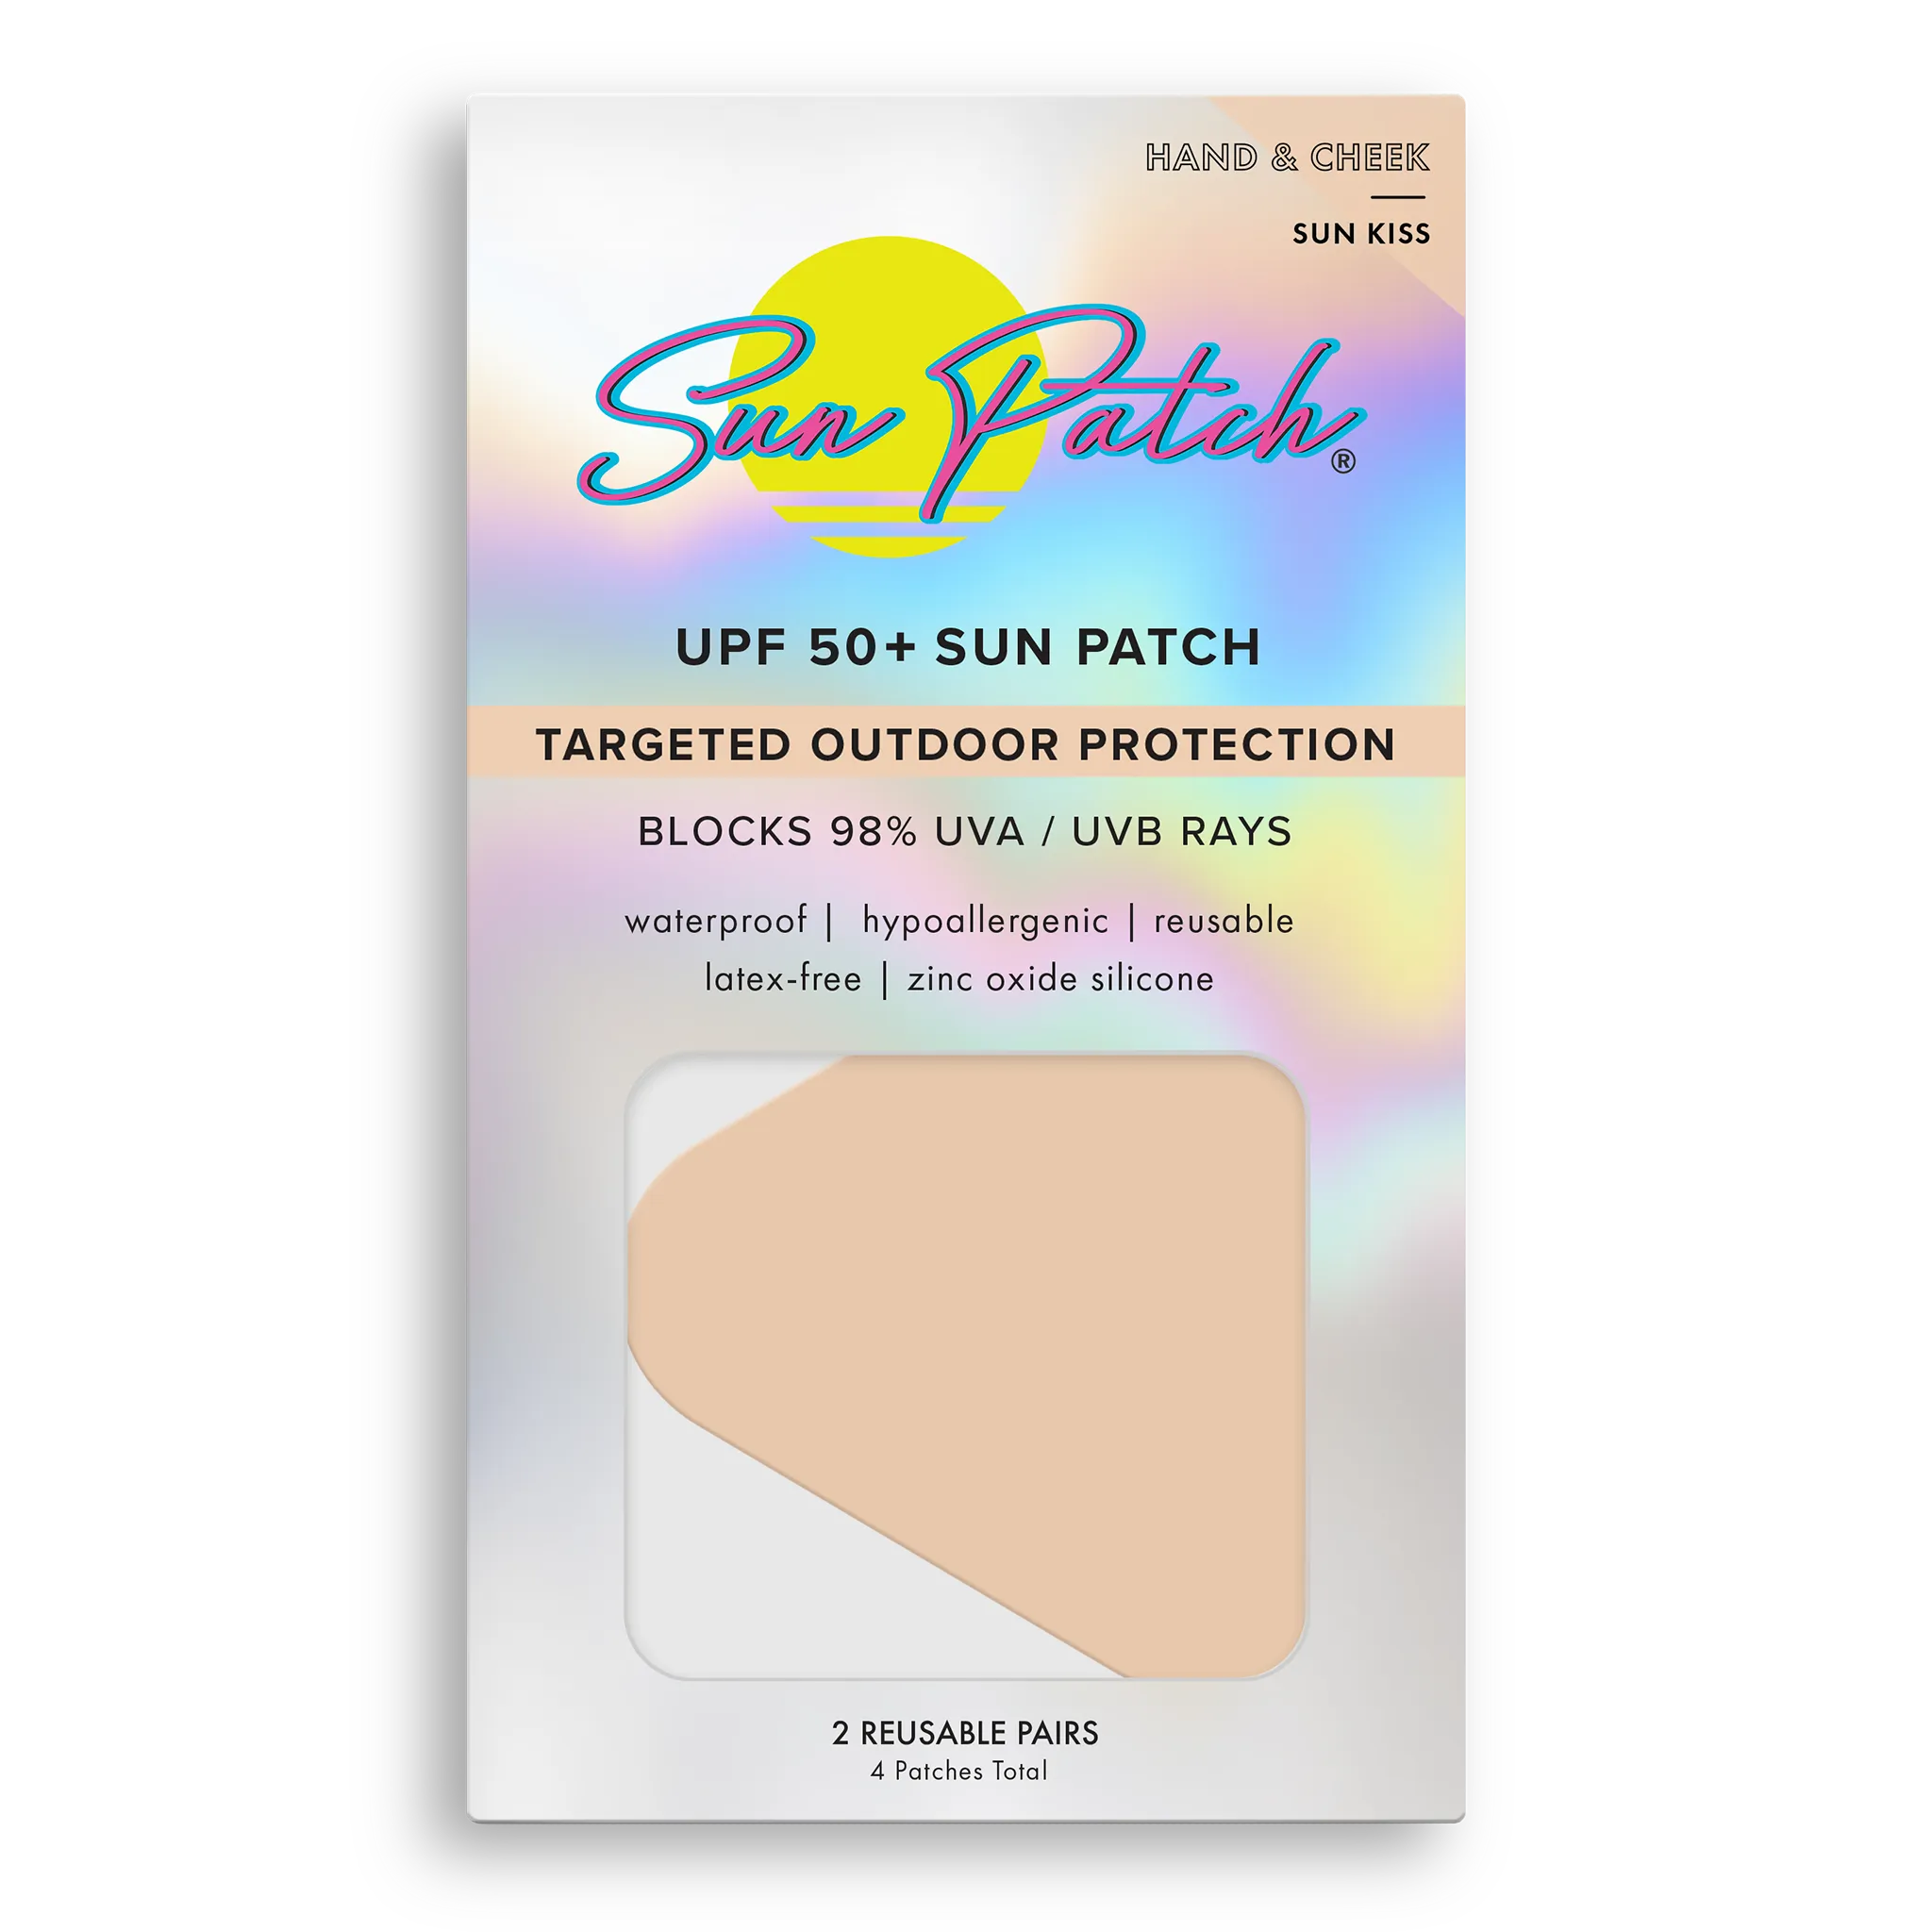 Hand + Cheek UV Protection – Sun Patch